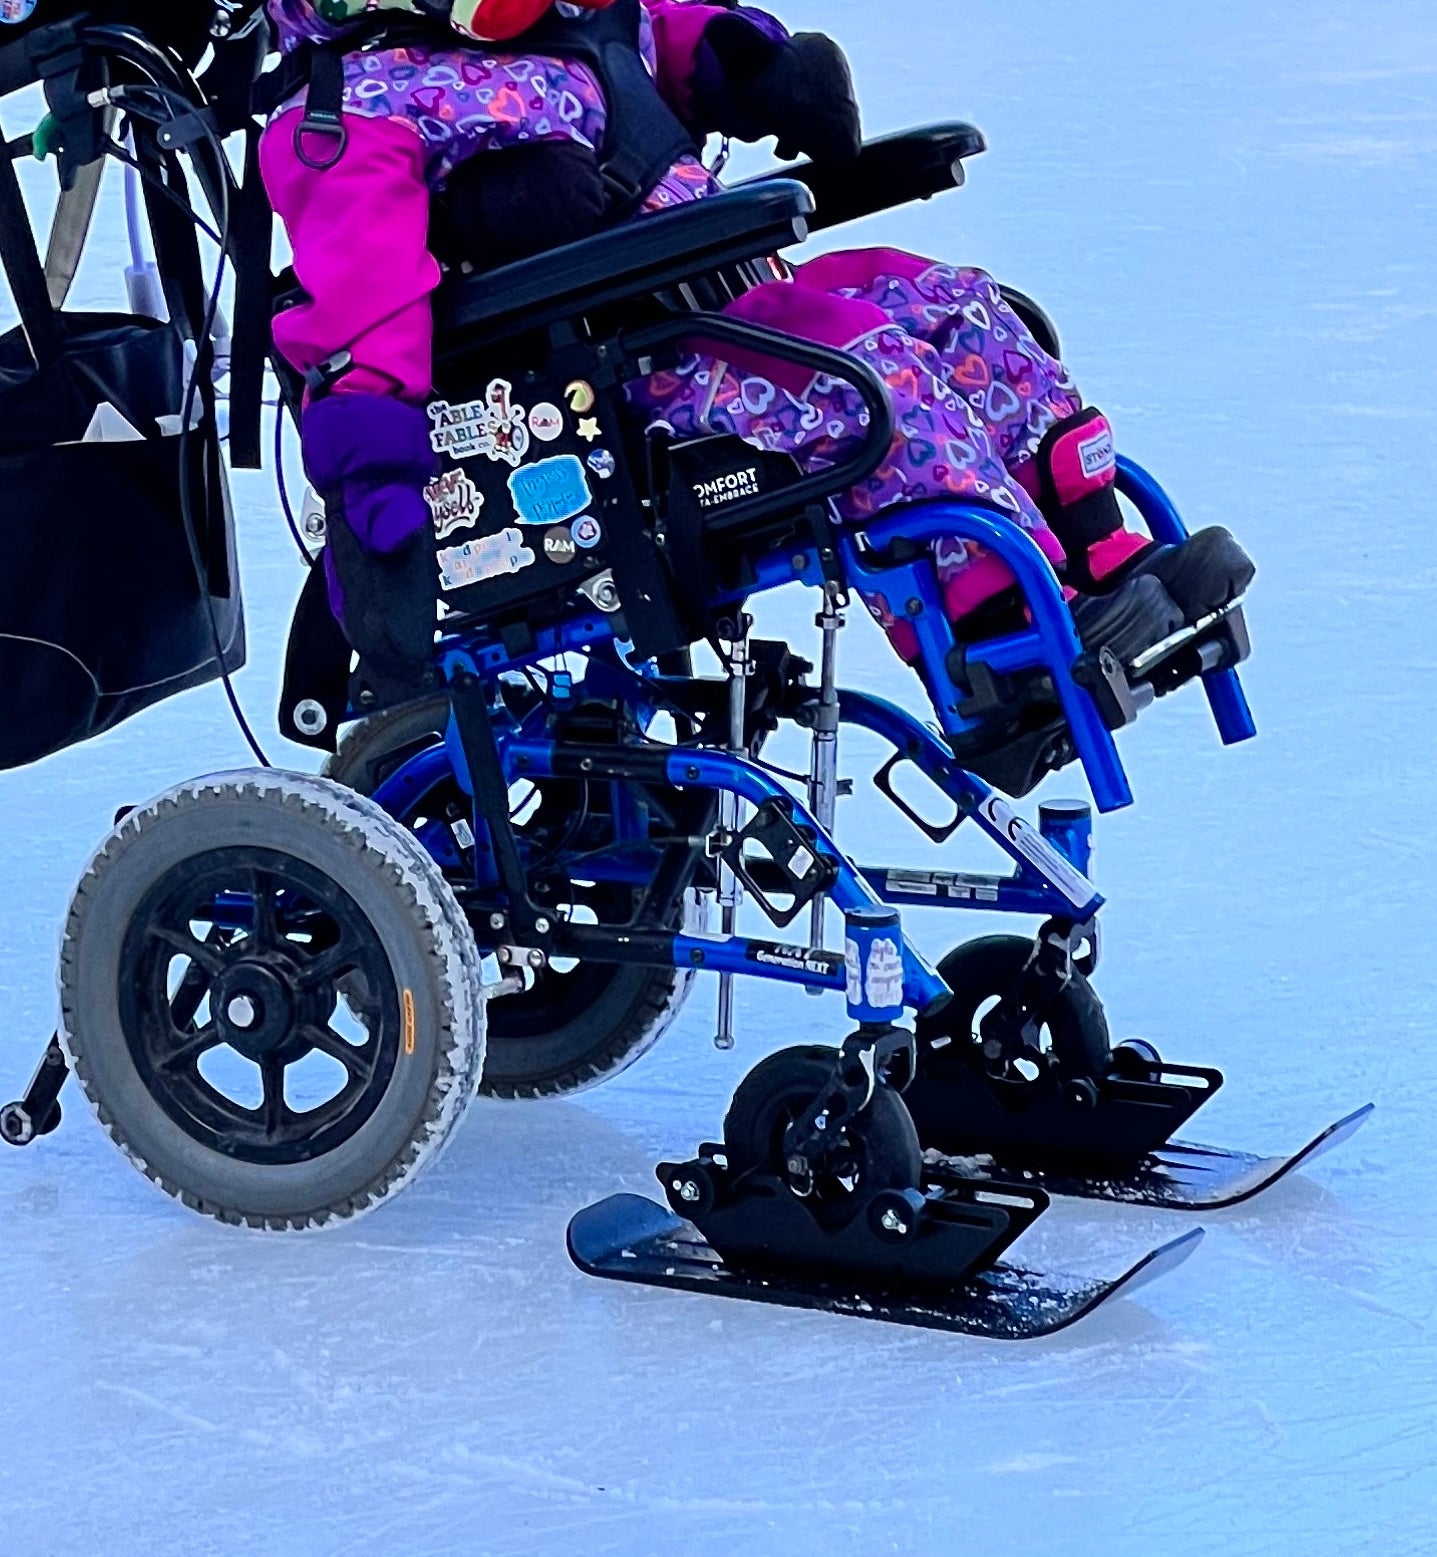 Polar skis for castle wheels on wheelchair